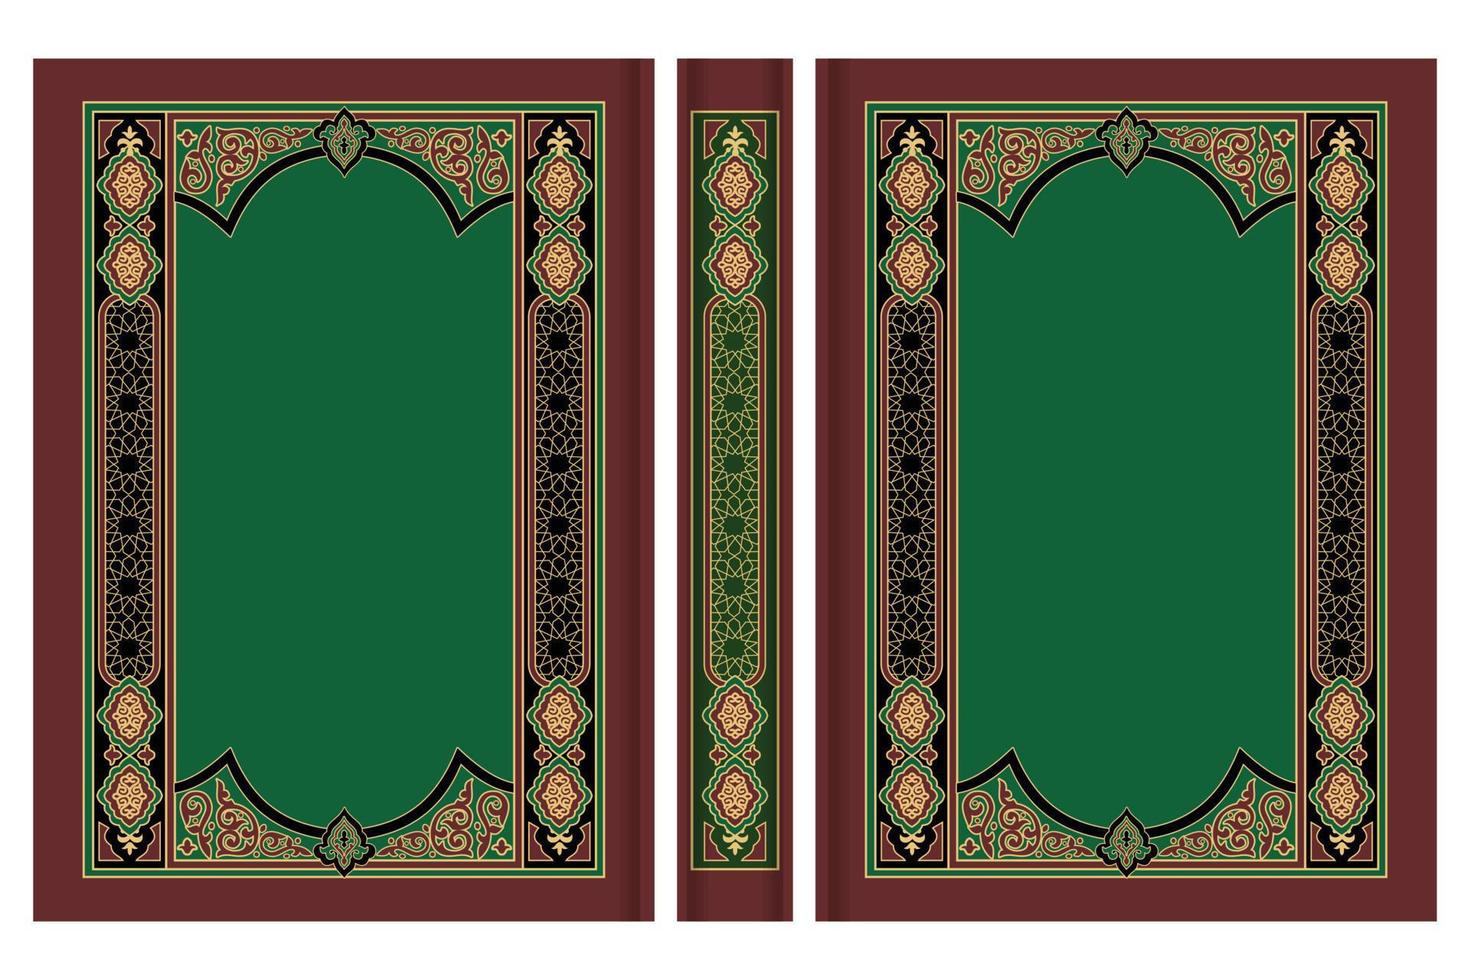 Arabic book cover, islmaic book cover, quran book cover vector